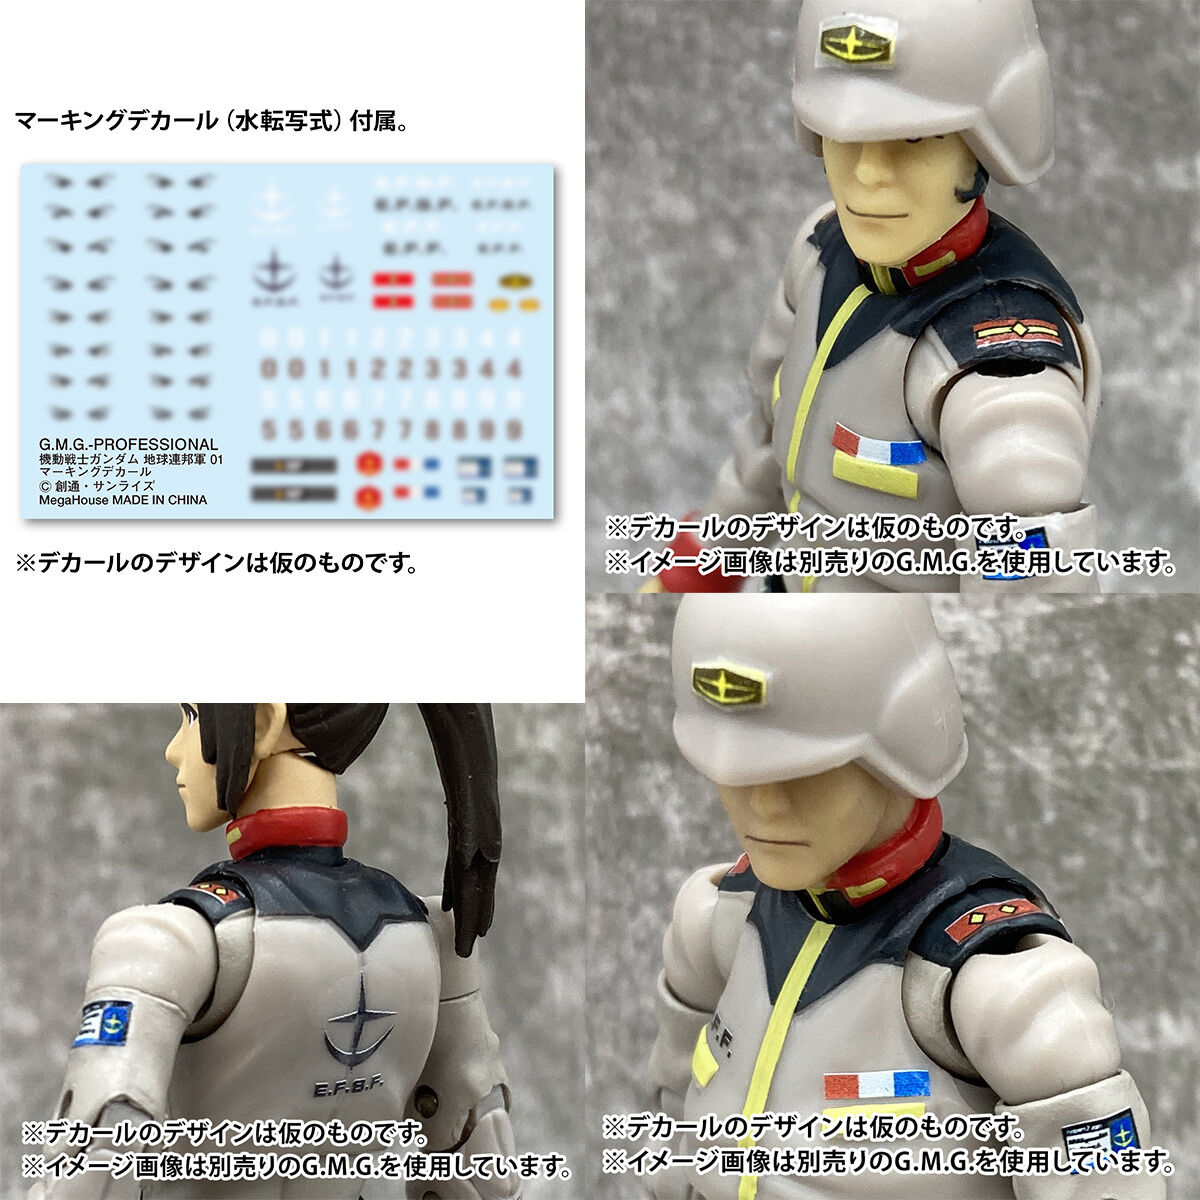 Megahobby Gundam Military Generation Professional 1/18 Earth Federation Soldier set(Mobile Suit Gundam)